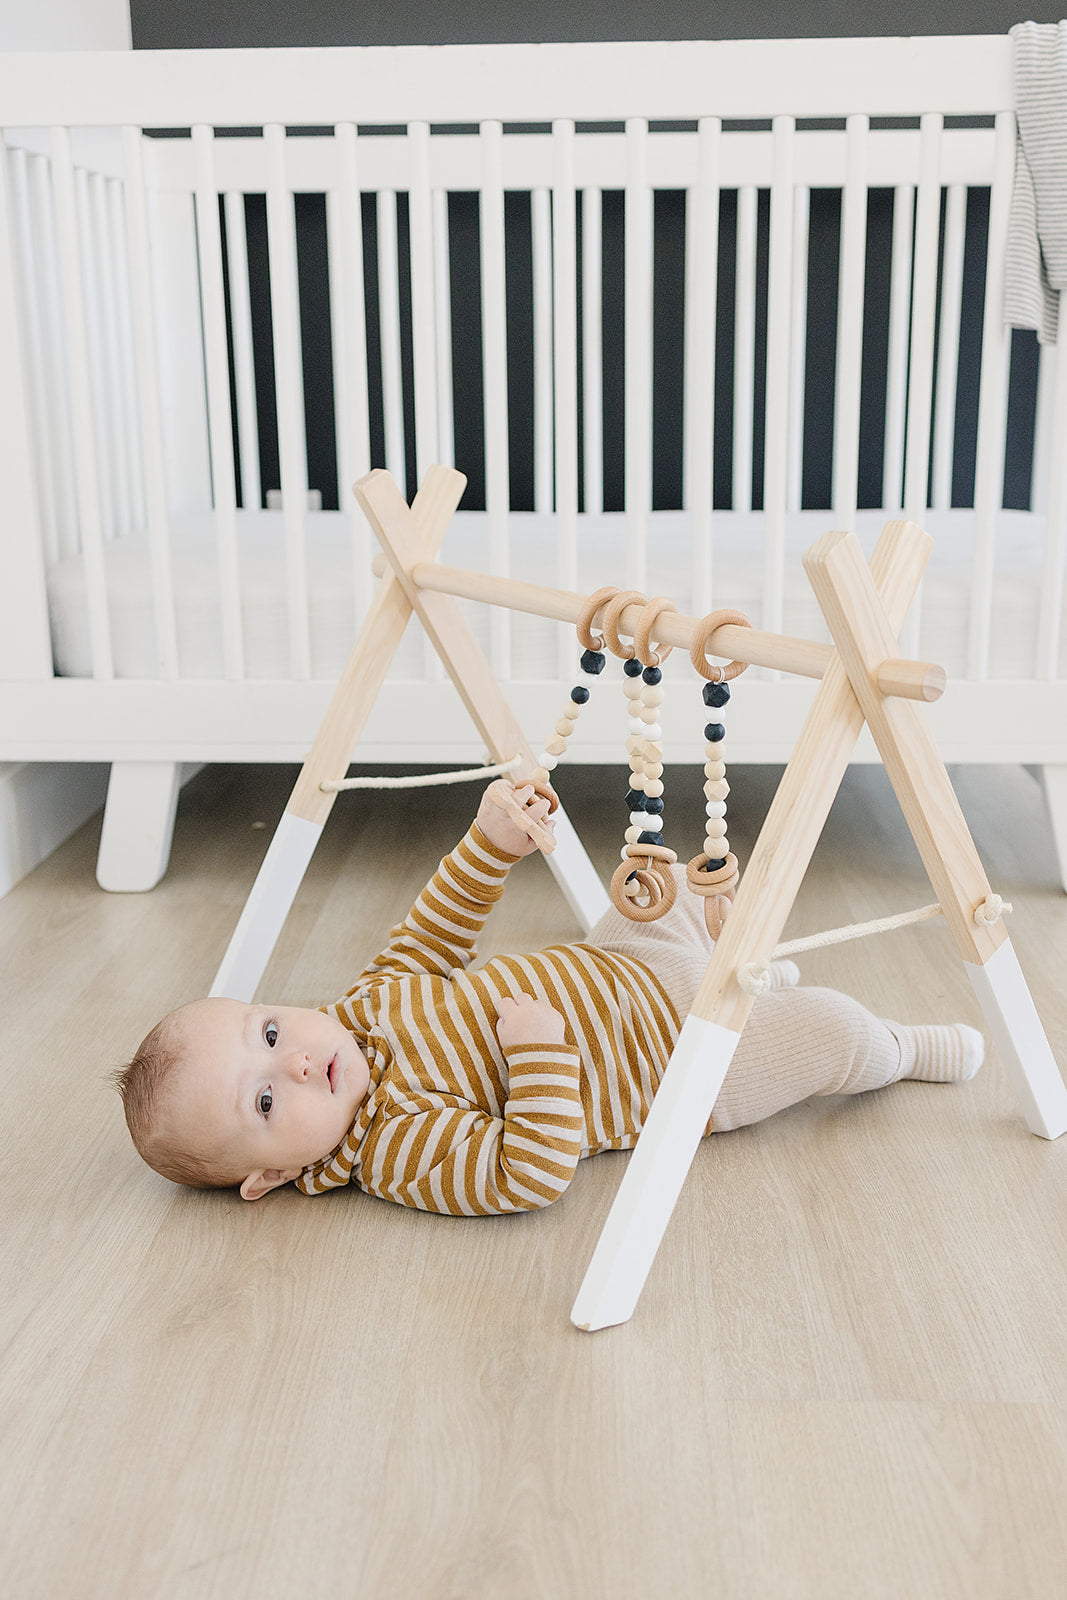 Wooden Baby Gym + Black Toys  - Poppyseed Play